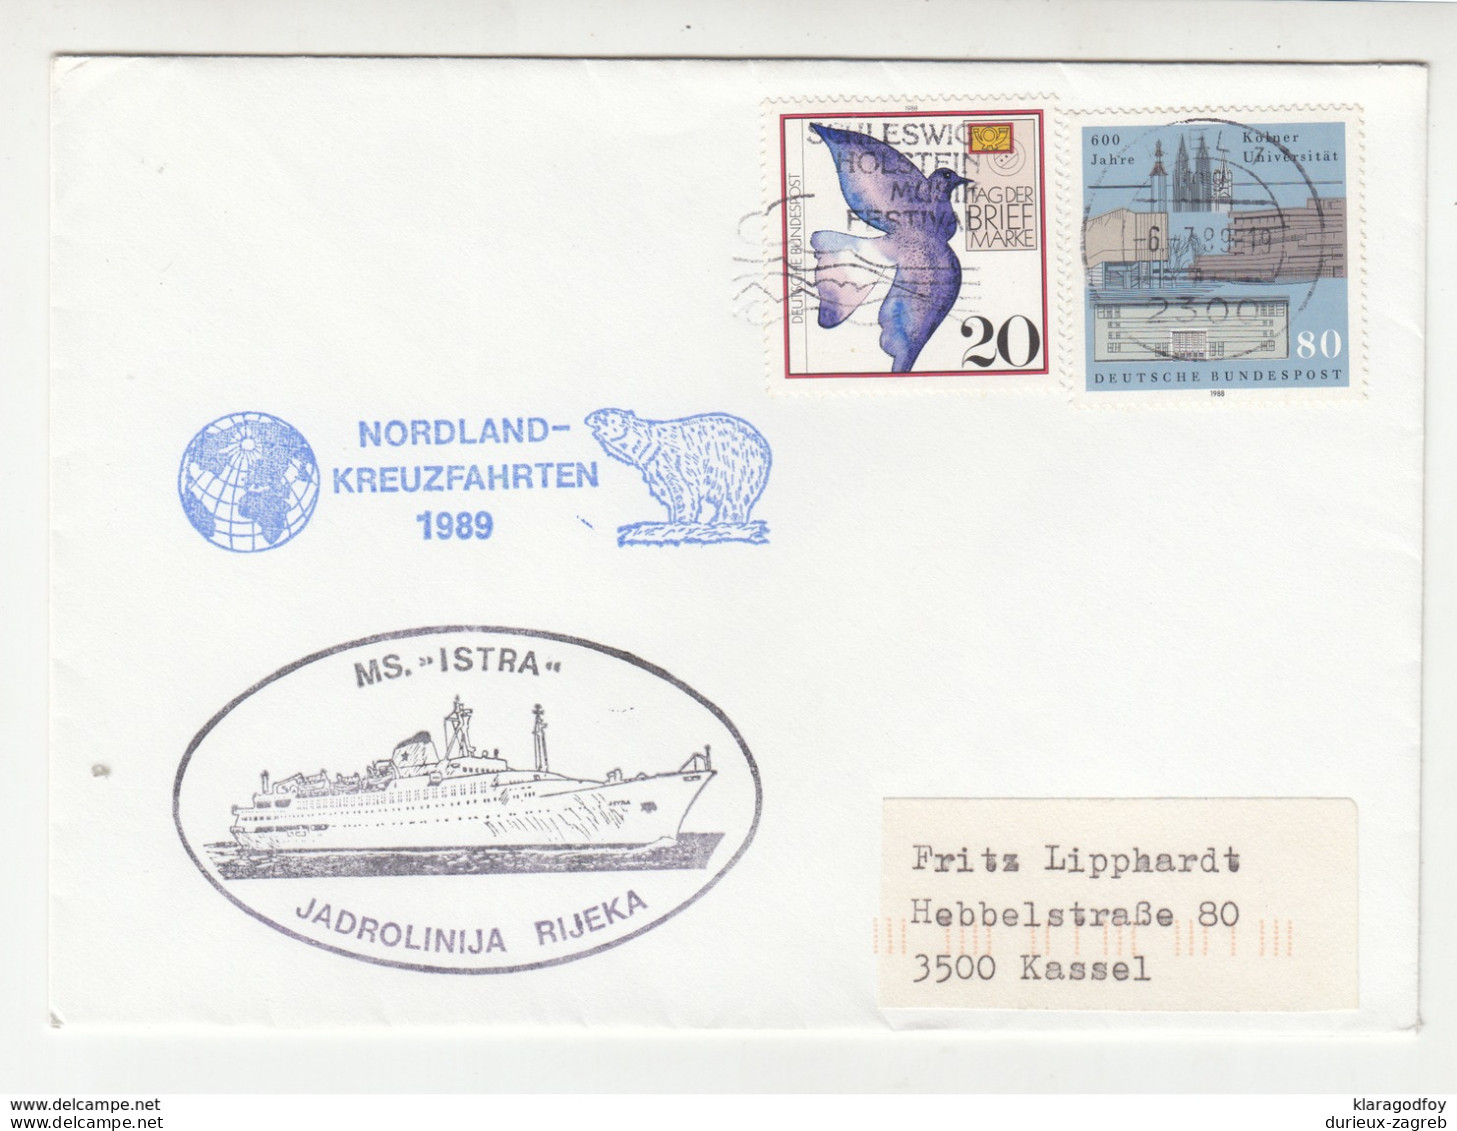 MS "Istra" Ship Post Letter Cover Nordland Kreuzfahrten 1989 Germany B202015 - Other (Sea)